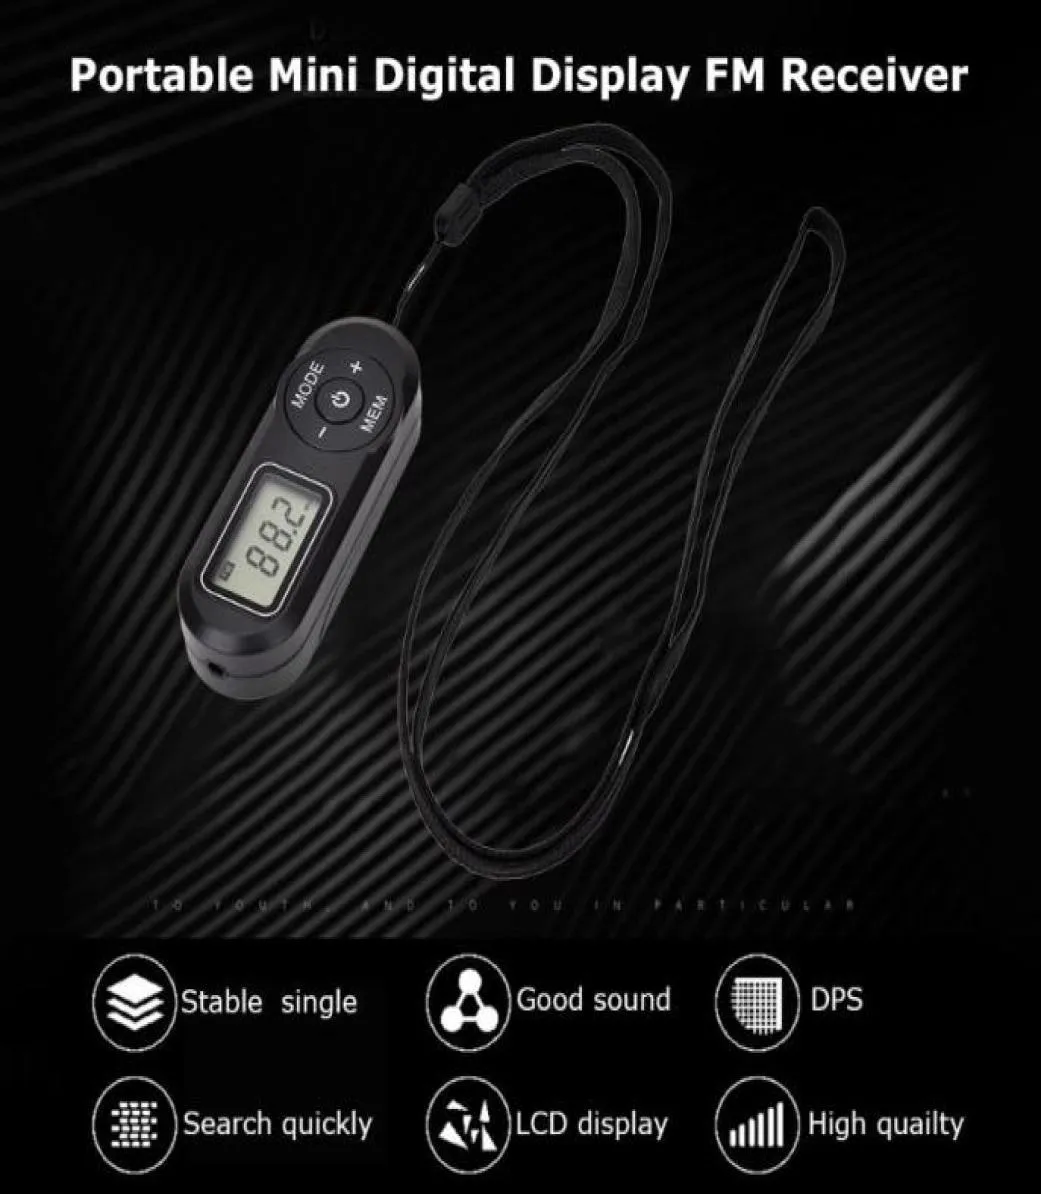 Novo hrd727 portátil mini rádio fm display digital receptor fm retro mp3 player estilo dsp com fones de ouvido lanyard1627317